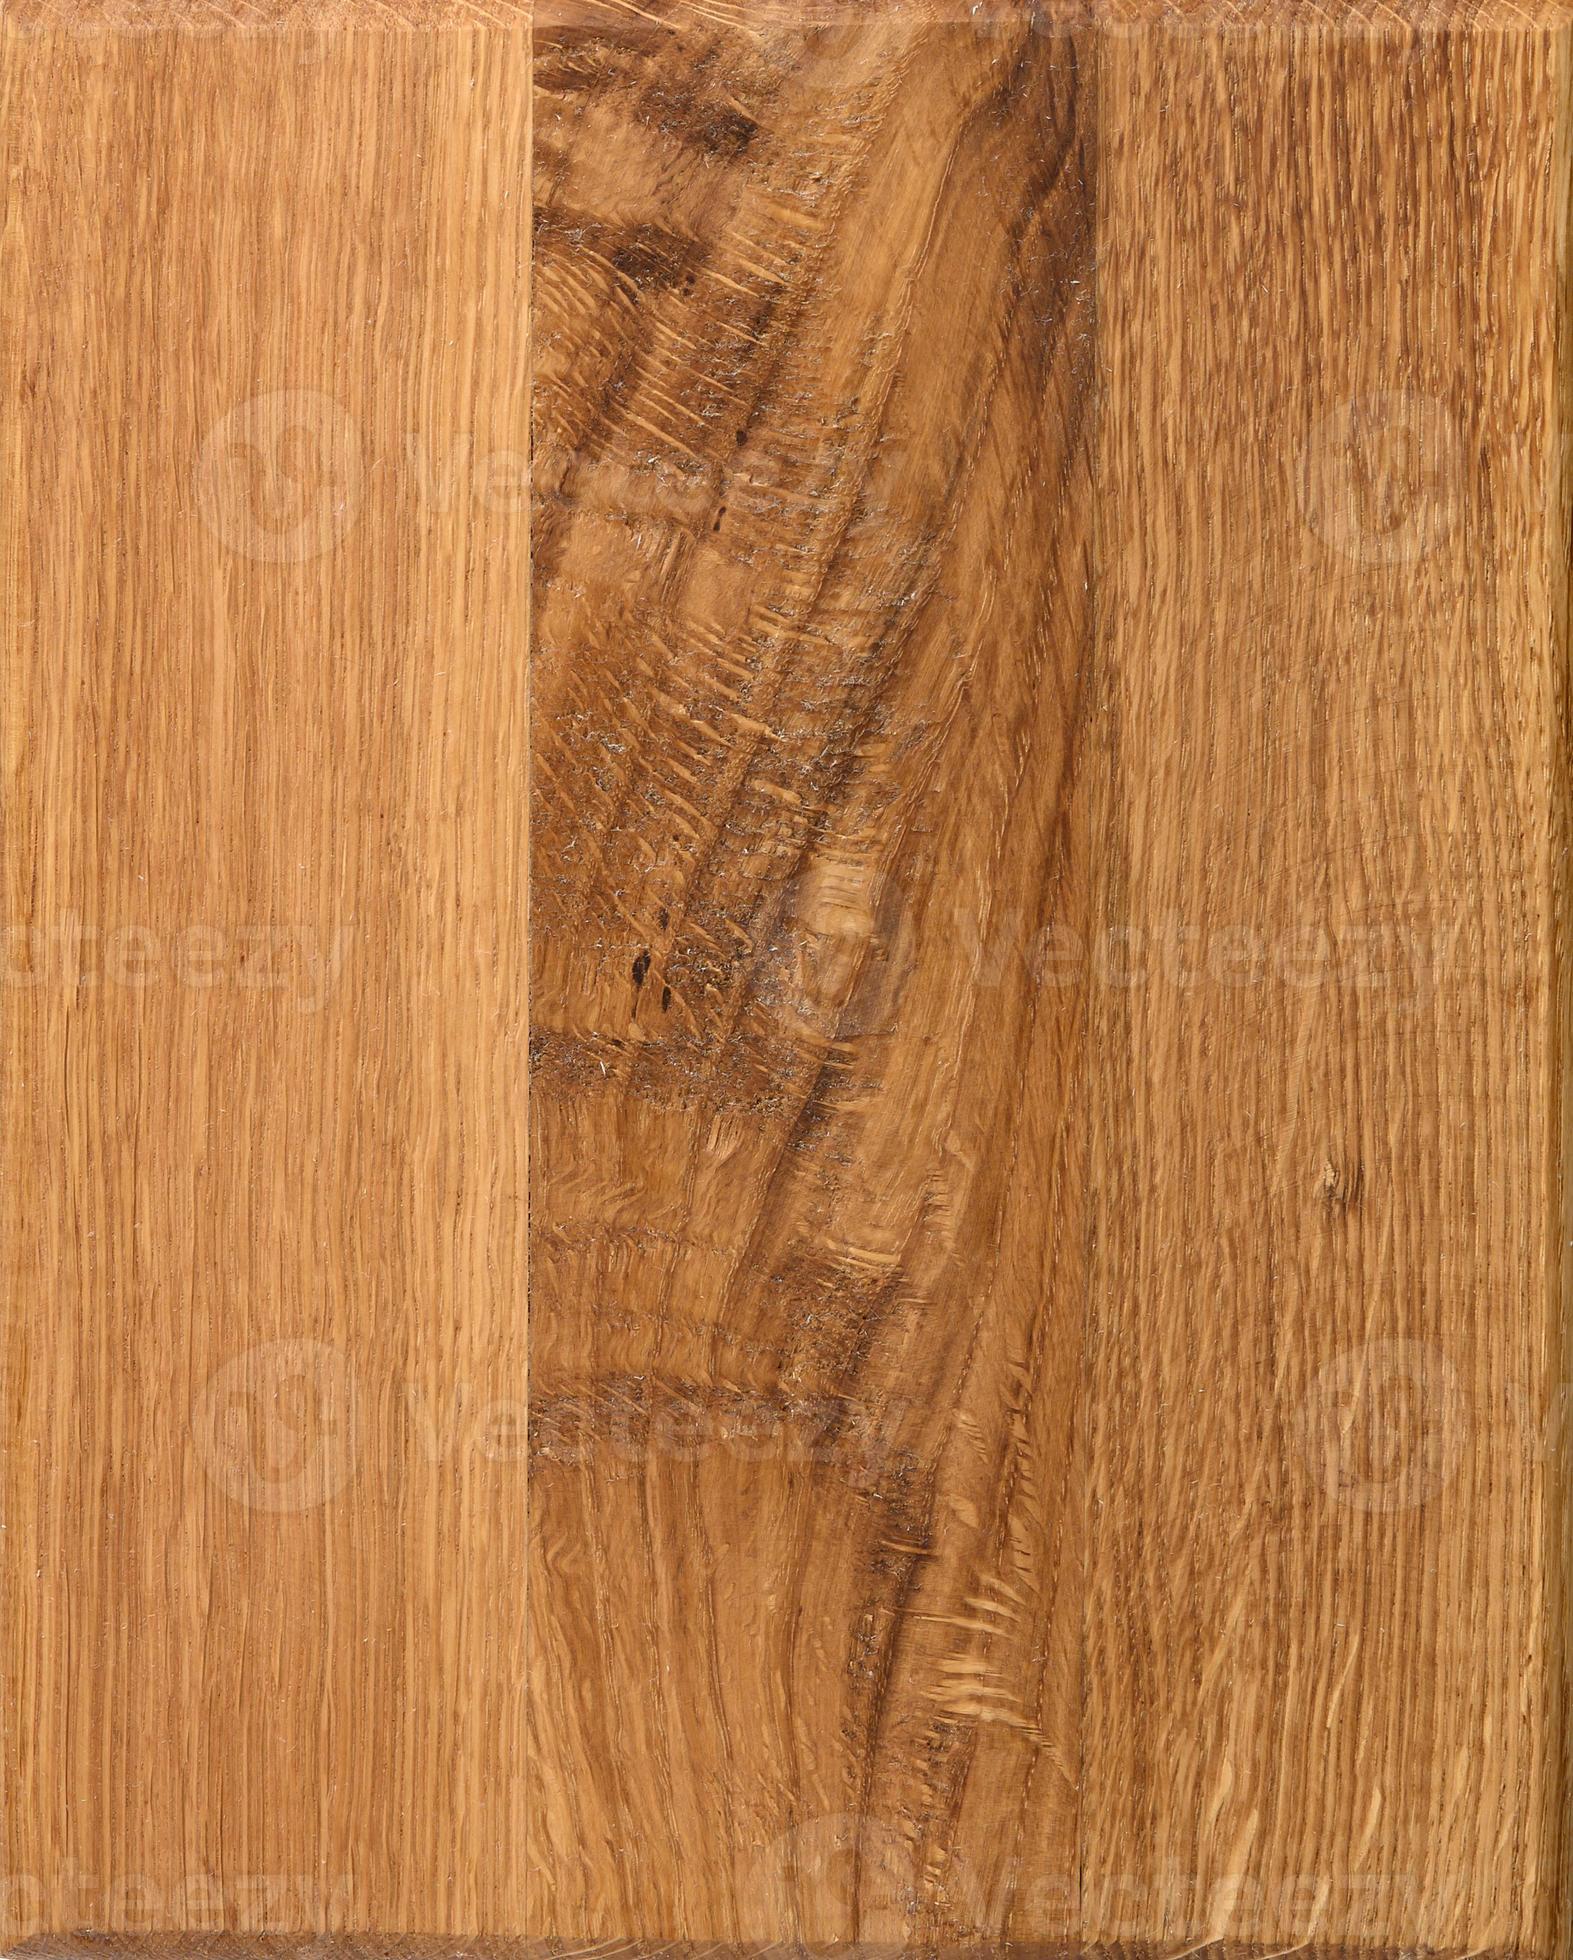 Okkernoot Brein krant bruin eik hout textuur, vol kader. onbehandeld hout 19034528 Stockfoto